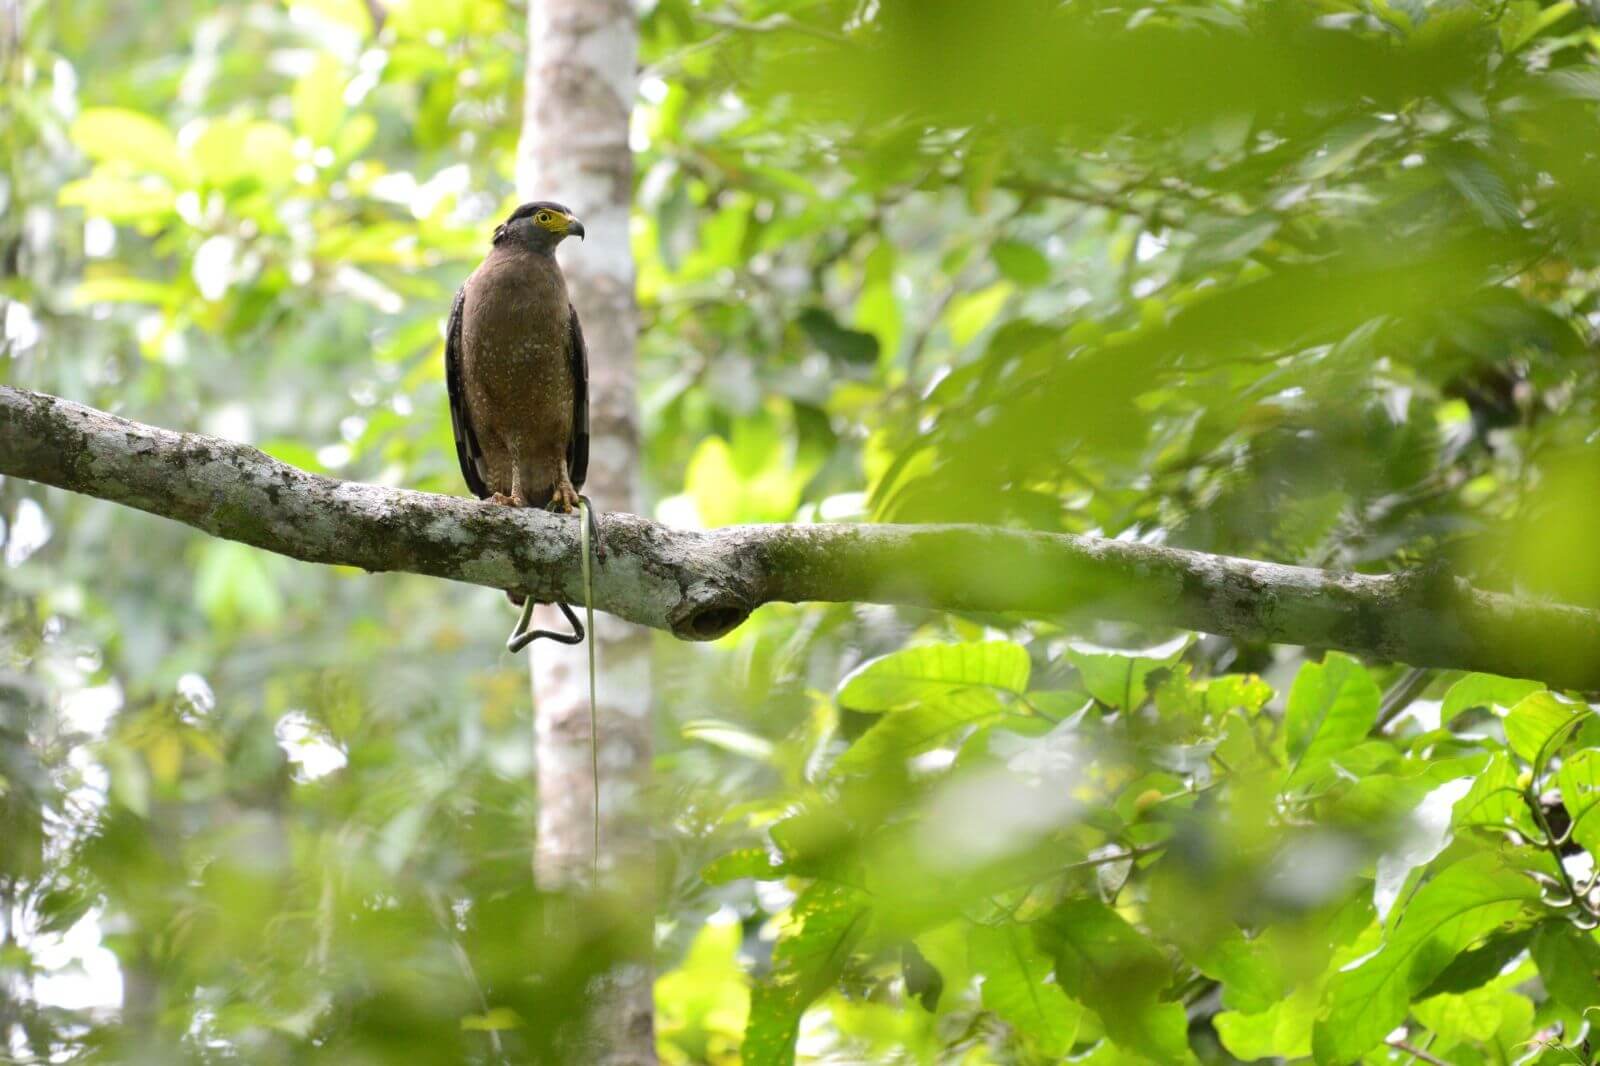 Borneo Rainforest Lodge - Eagle Crested Serpent